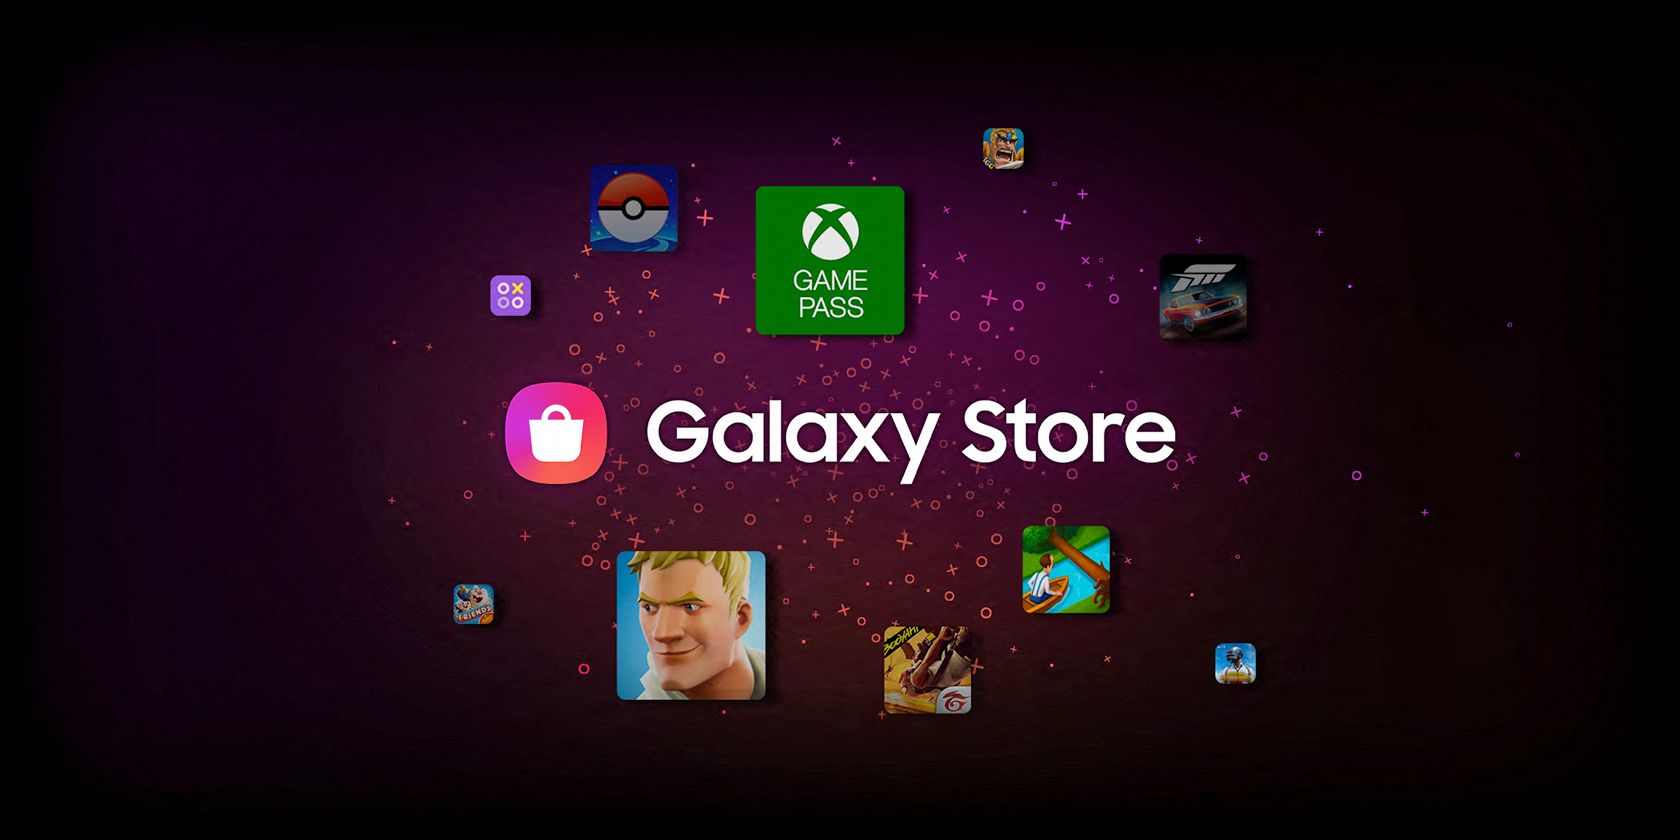 Galaxy Store update